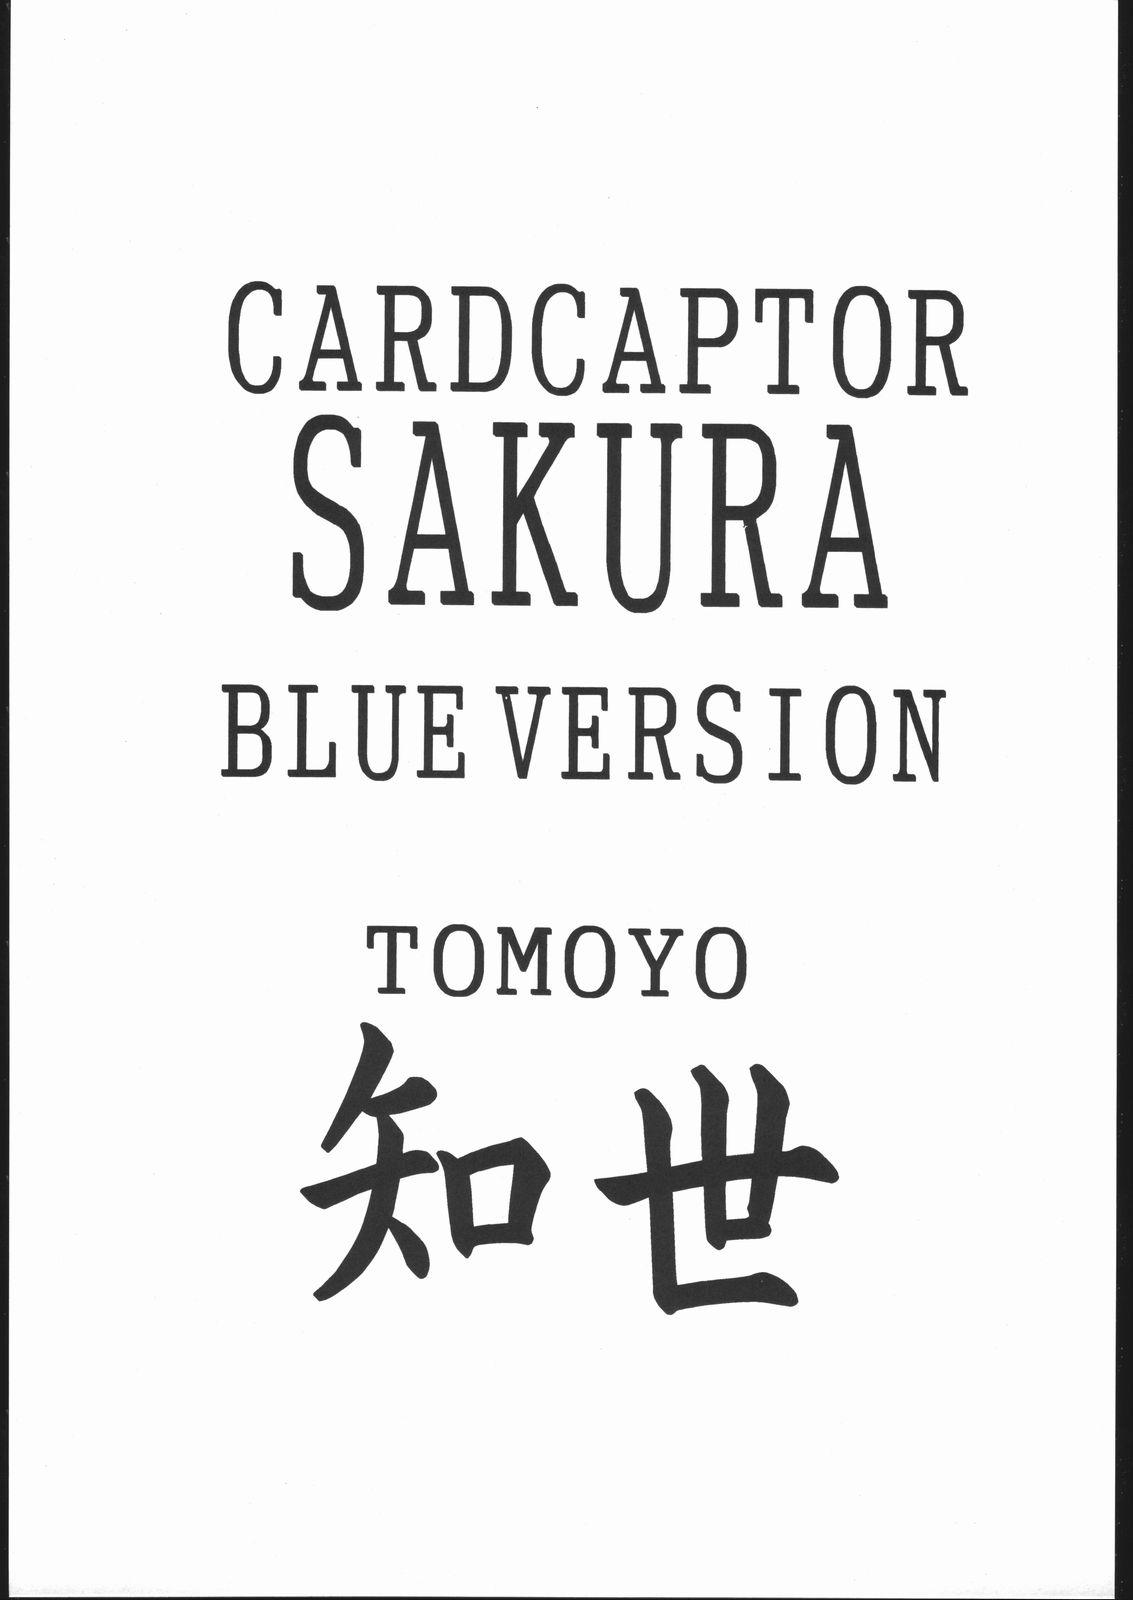 Moaning Card Captor Sakura Blue Version - Cardcaptor sakura Asiansex - Picture 2